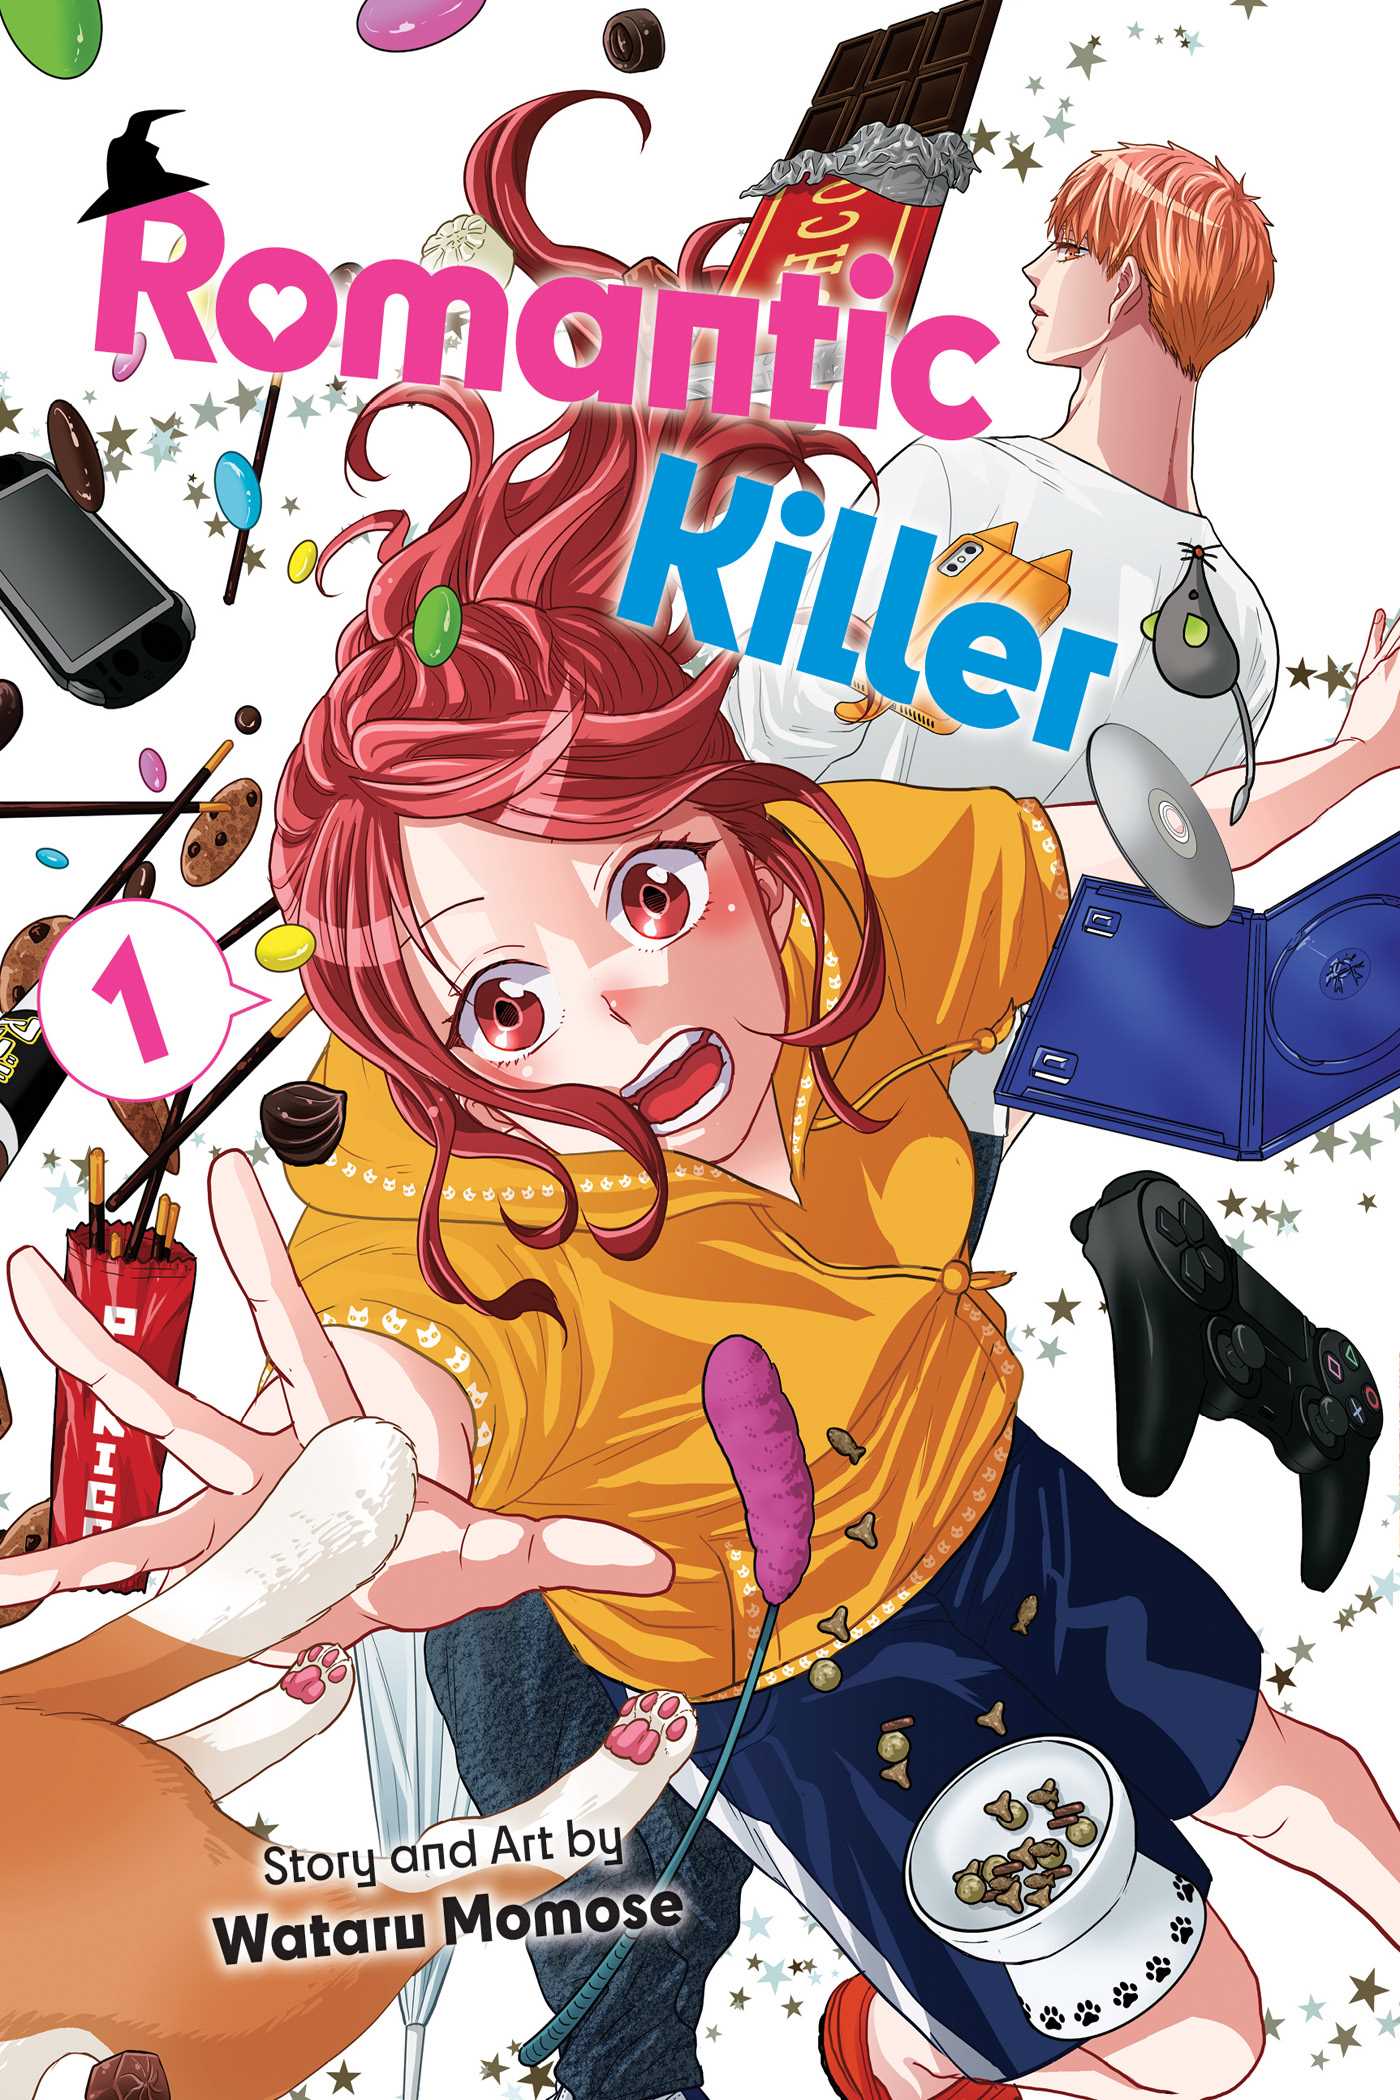 Romantic Killer anime